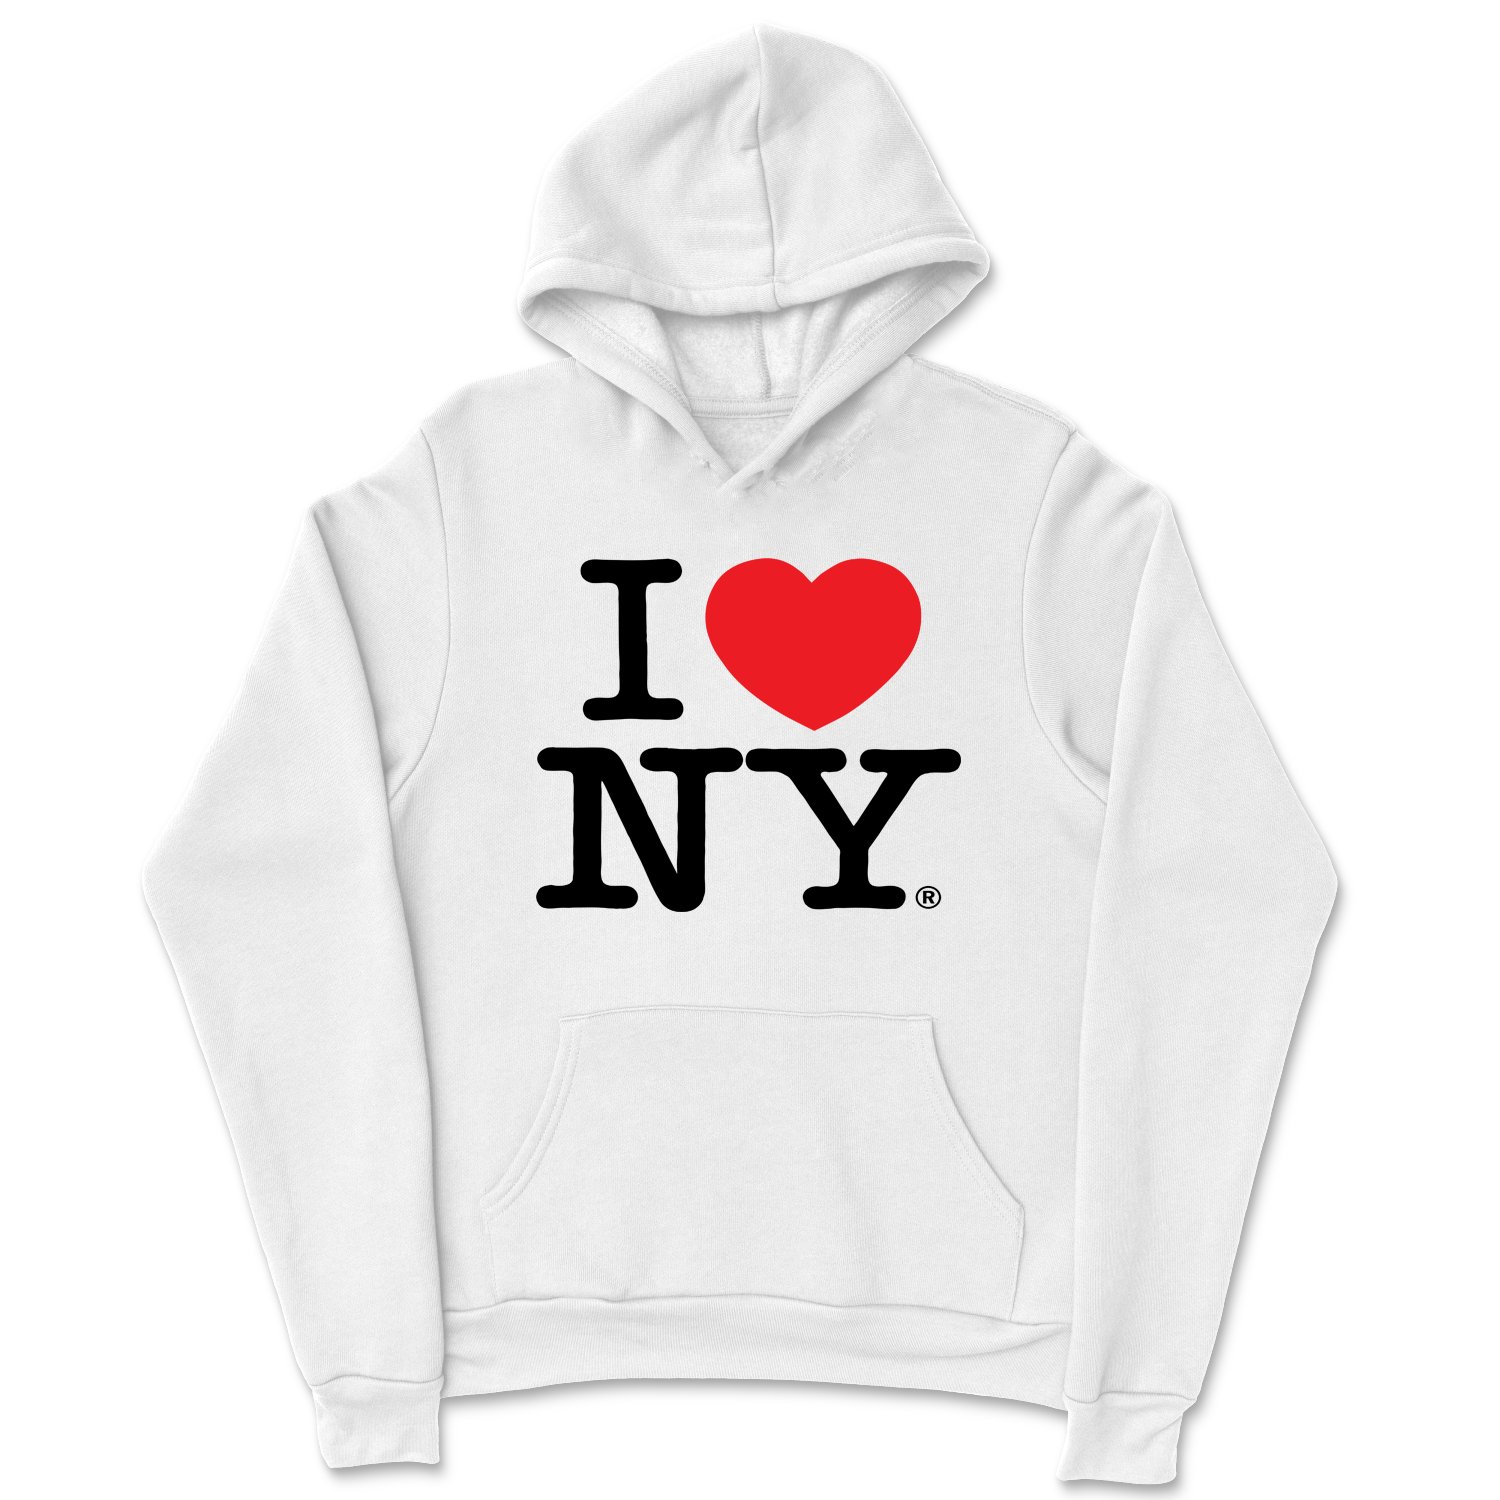 I Love NY Kids Hoodie Sweatshirt Officially Licensed